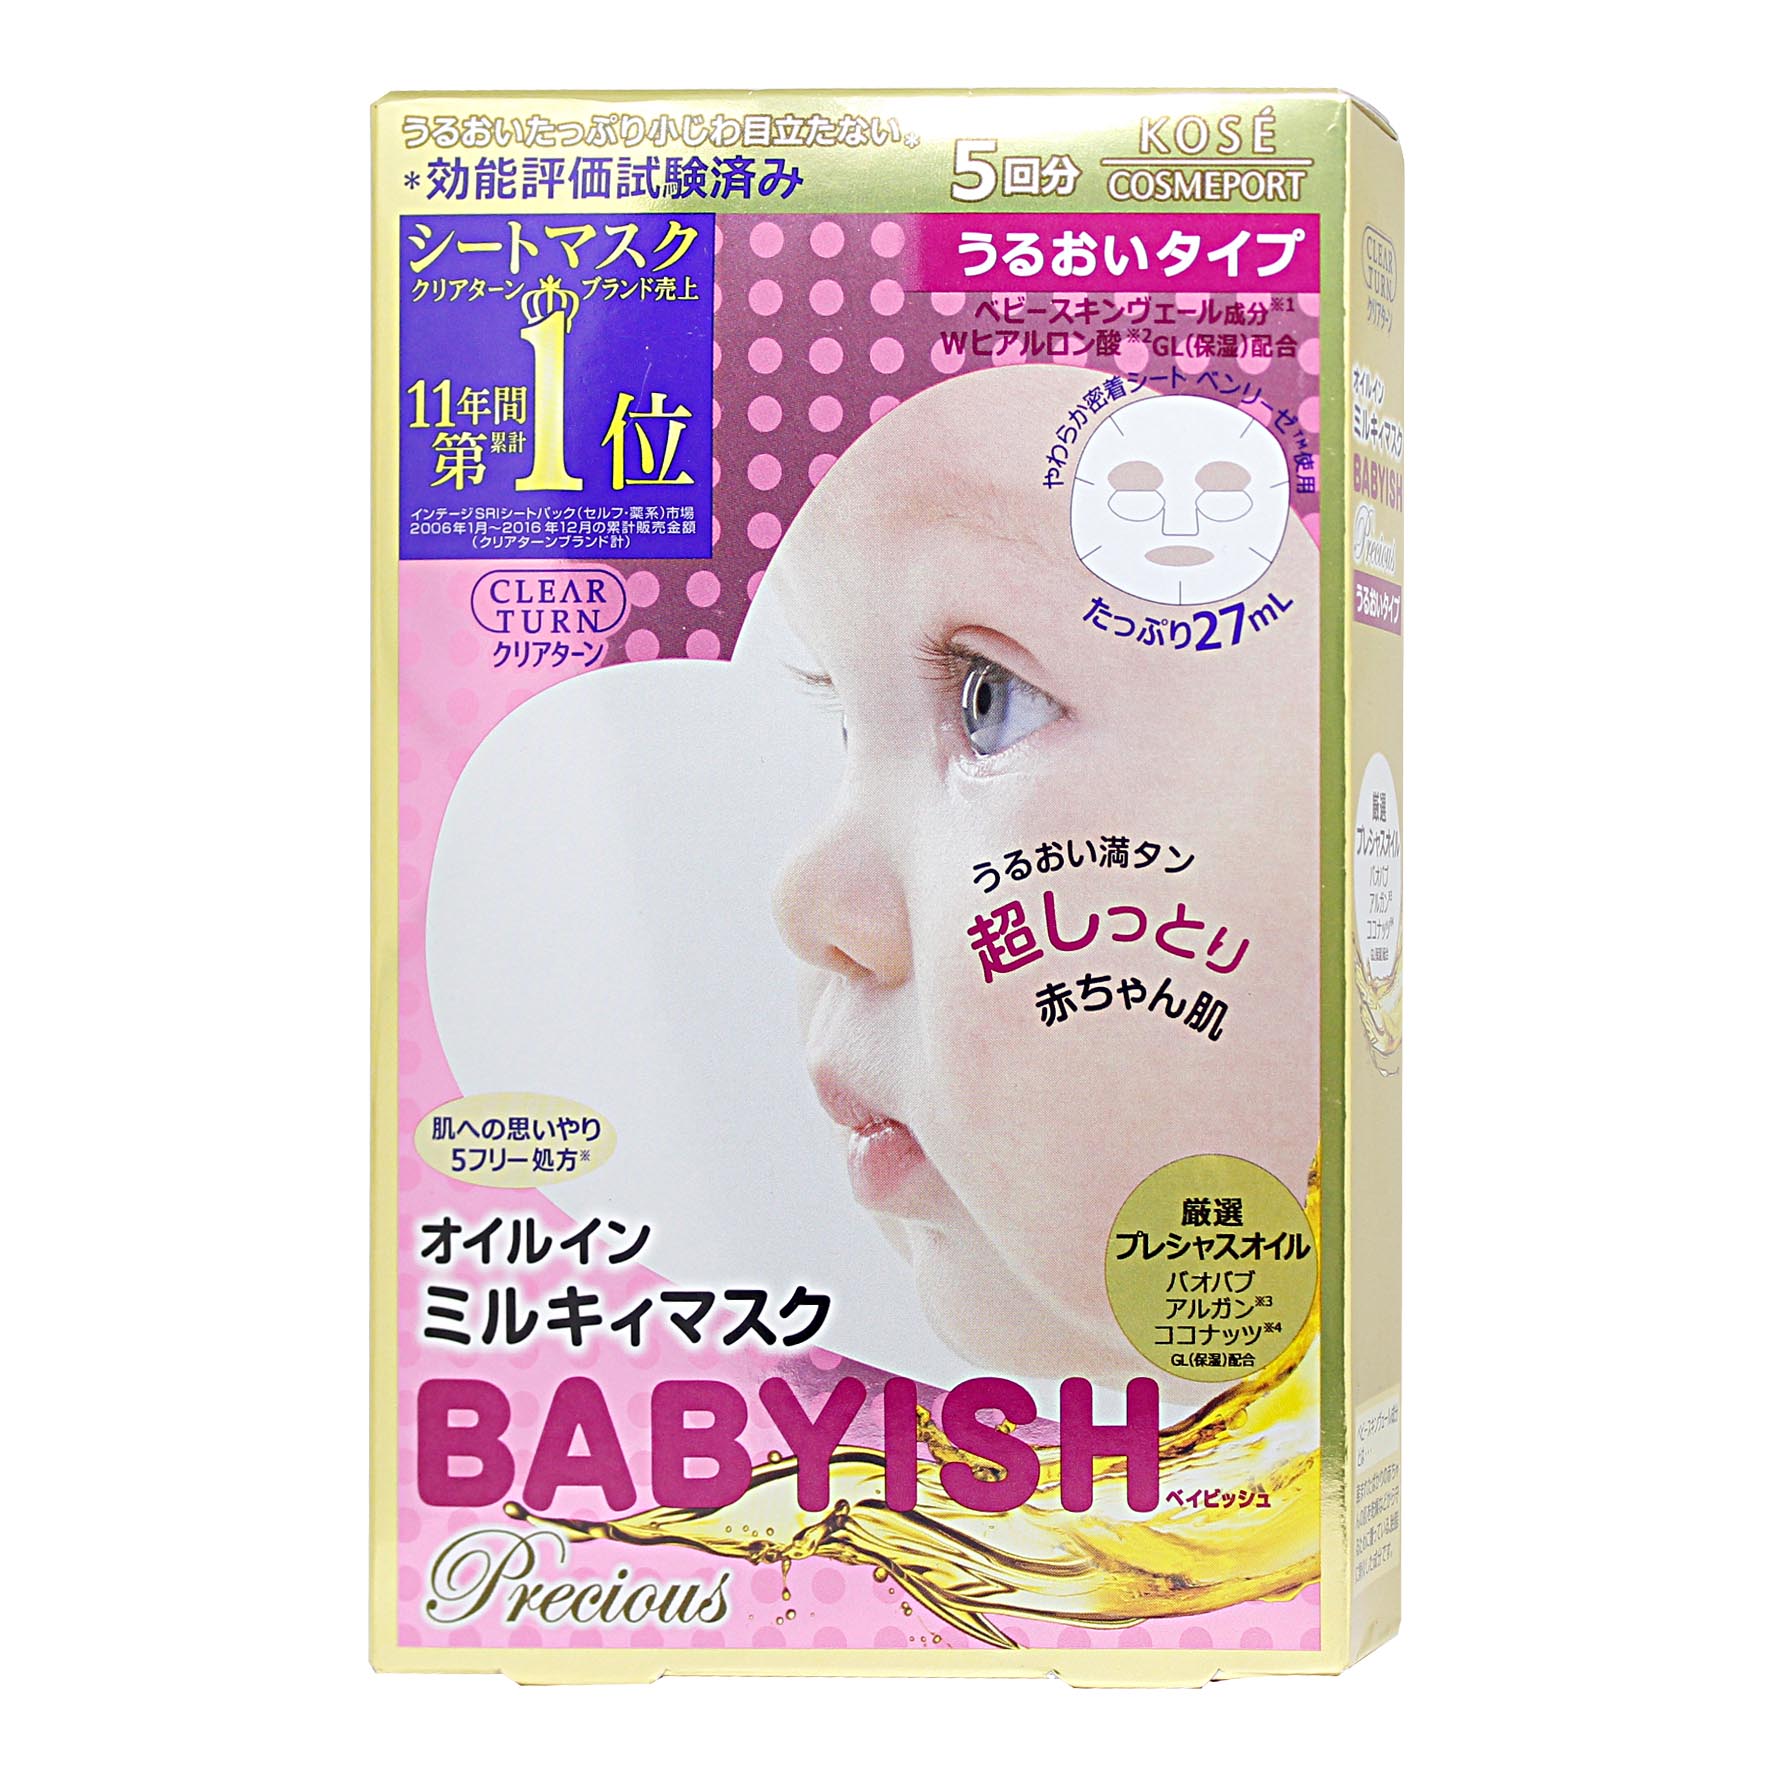 Kose Cosmeport Kose Clear Turn Babyish Precious Mask A